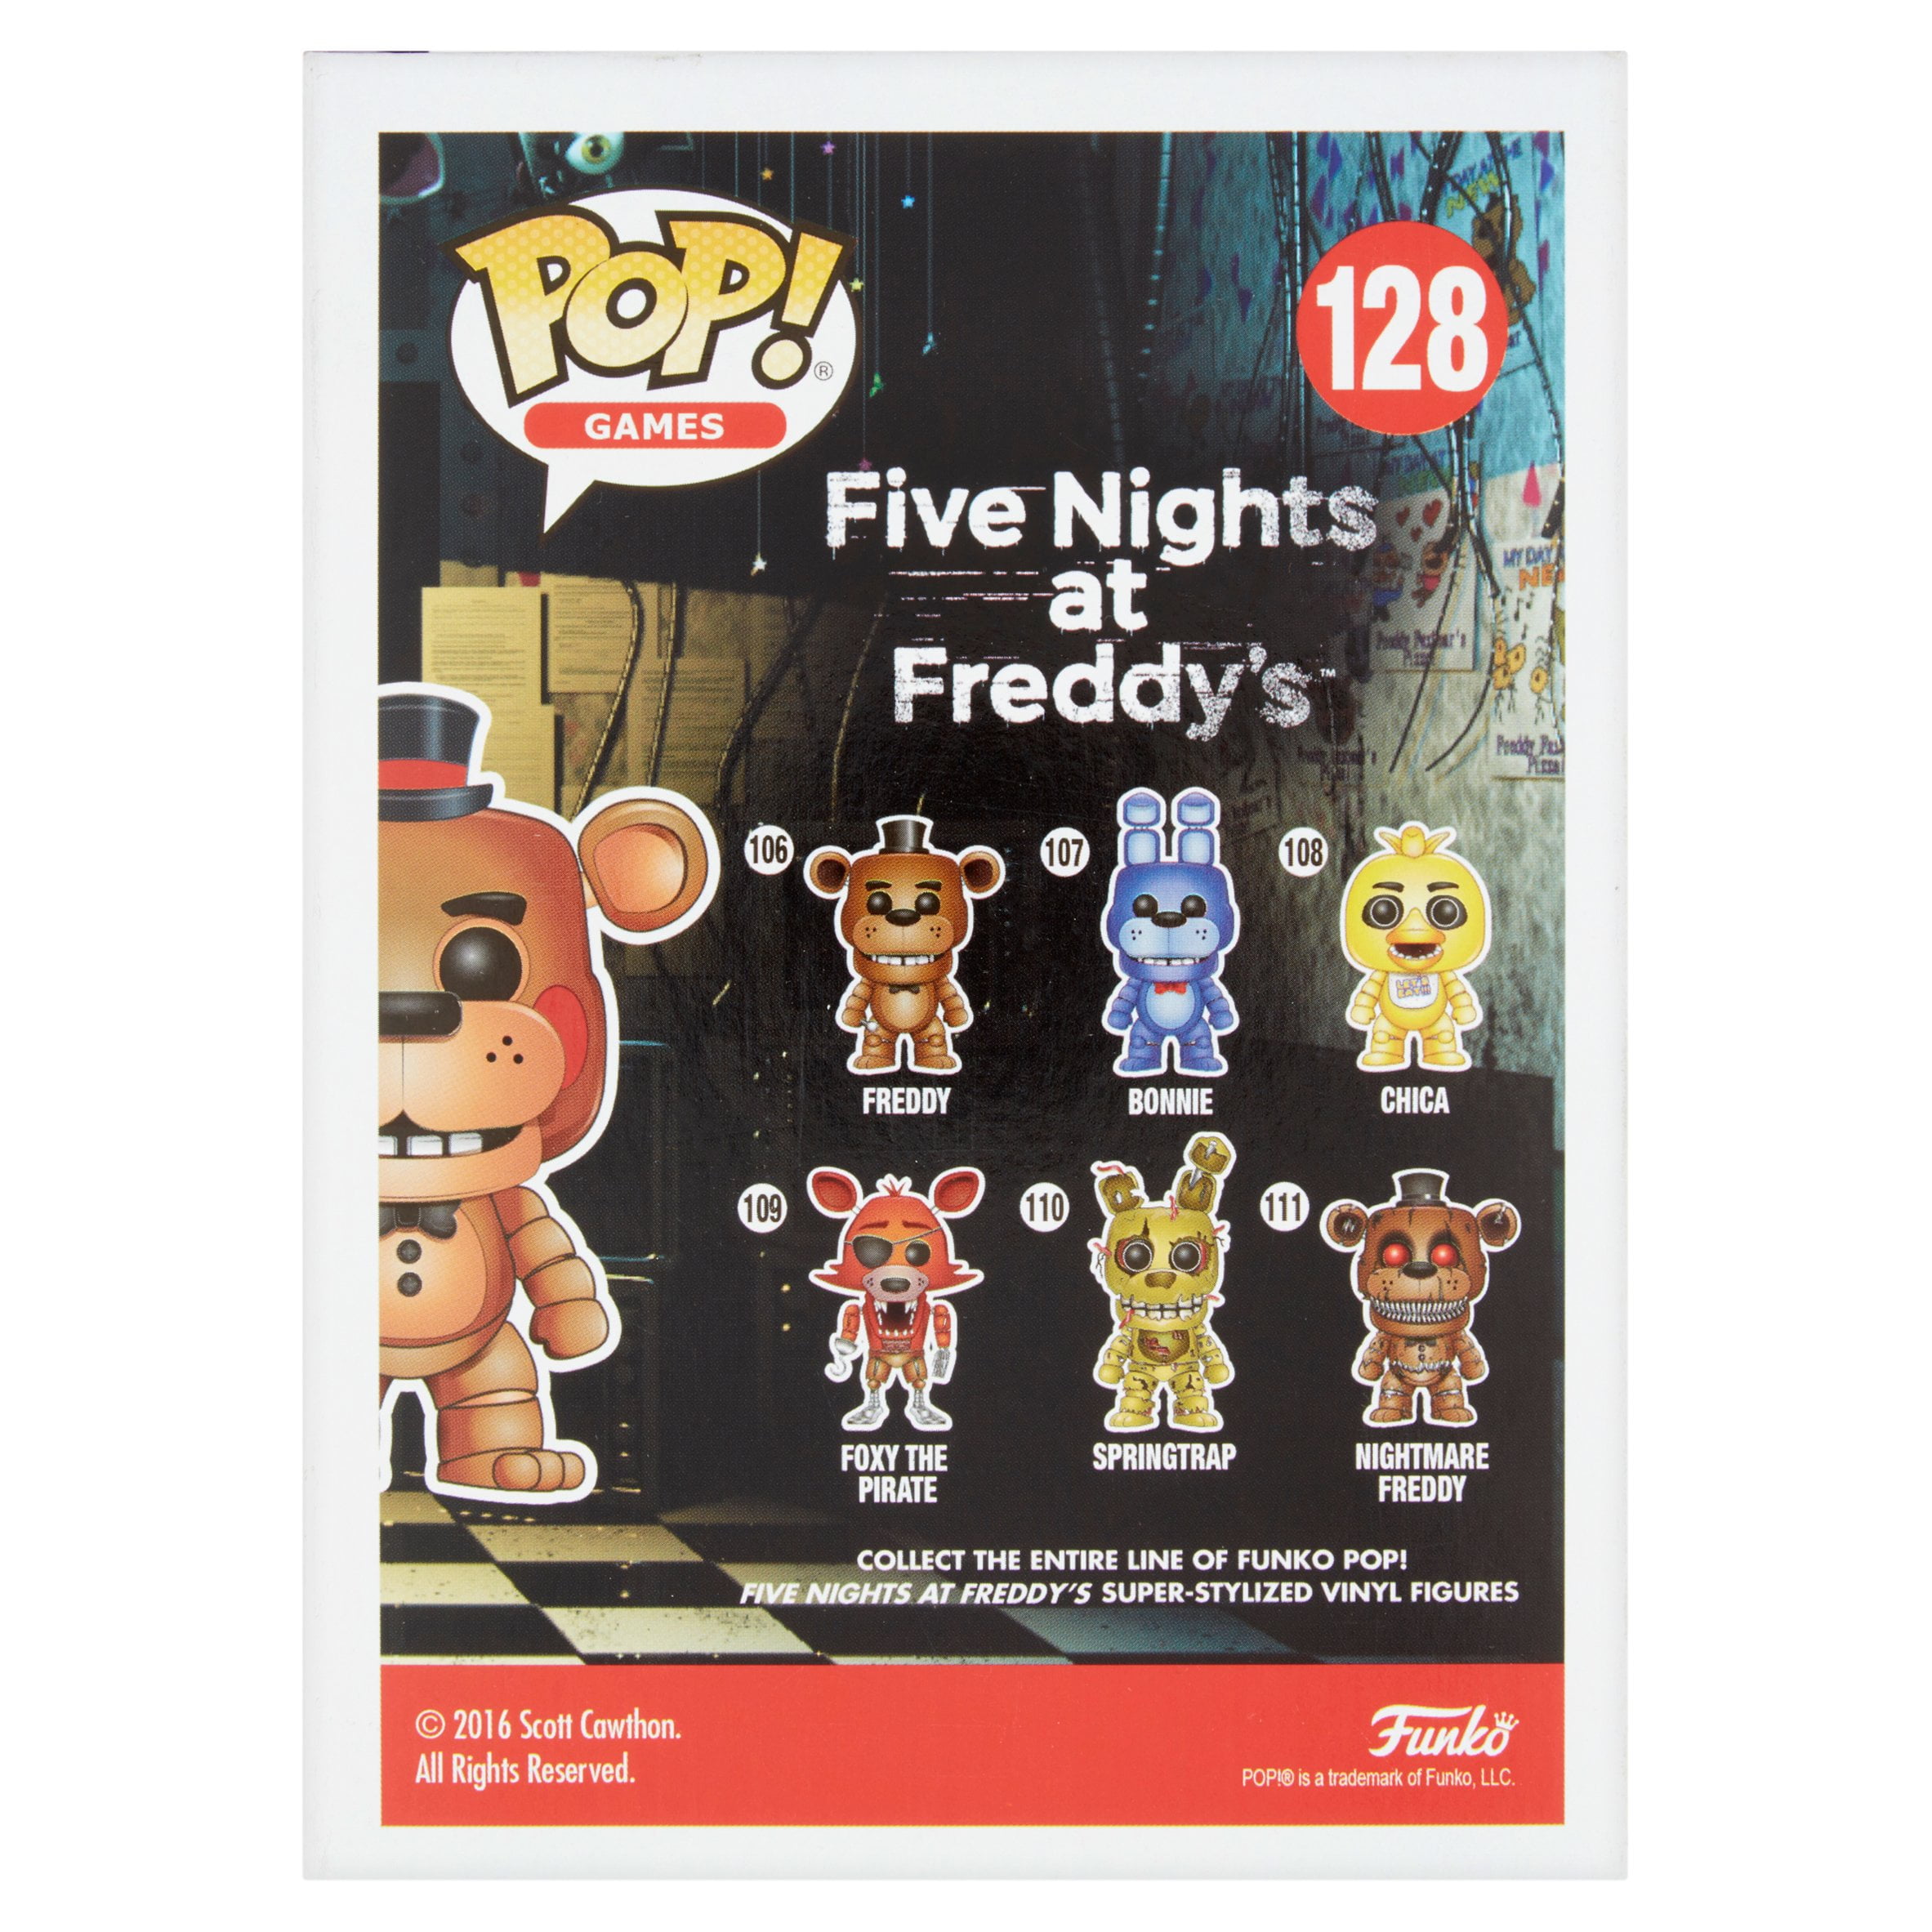 Funko Five Nights at Freddys POP Games Toy Freddy Exclusive Vinyl Figure  128 - ToyWiz